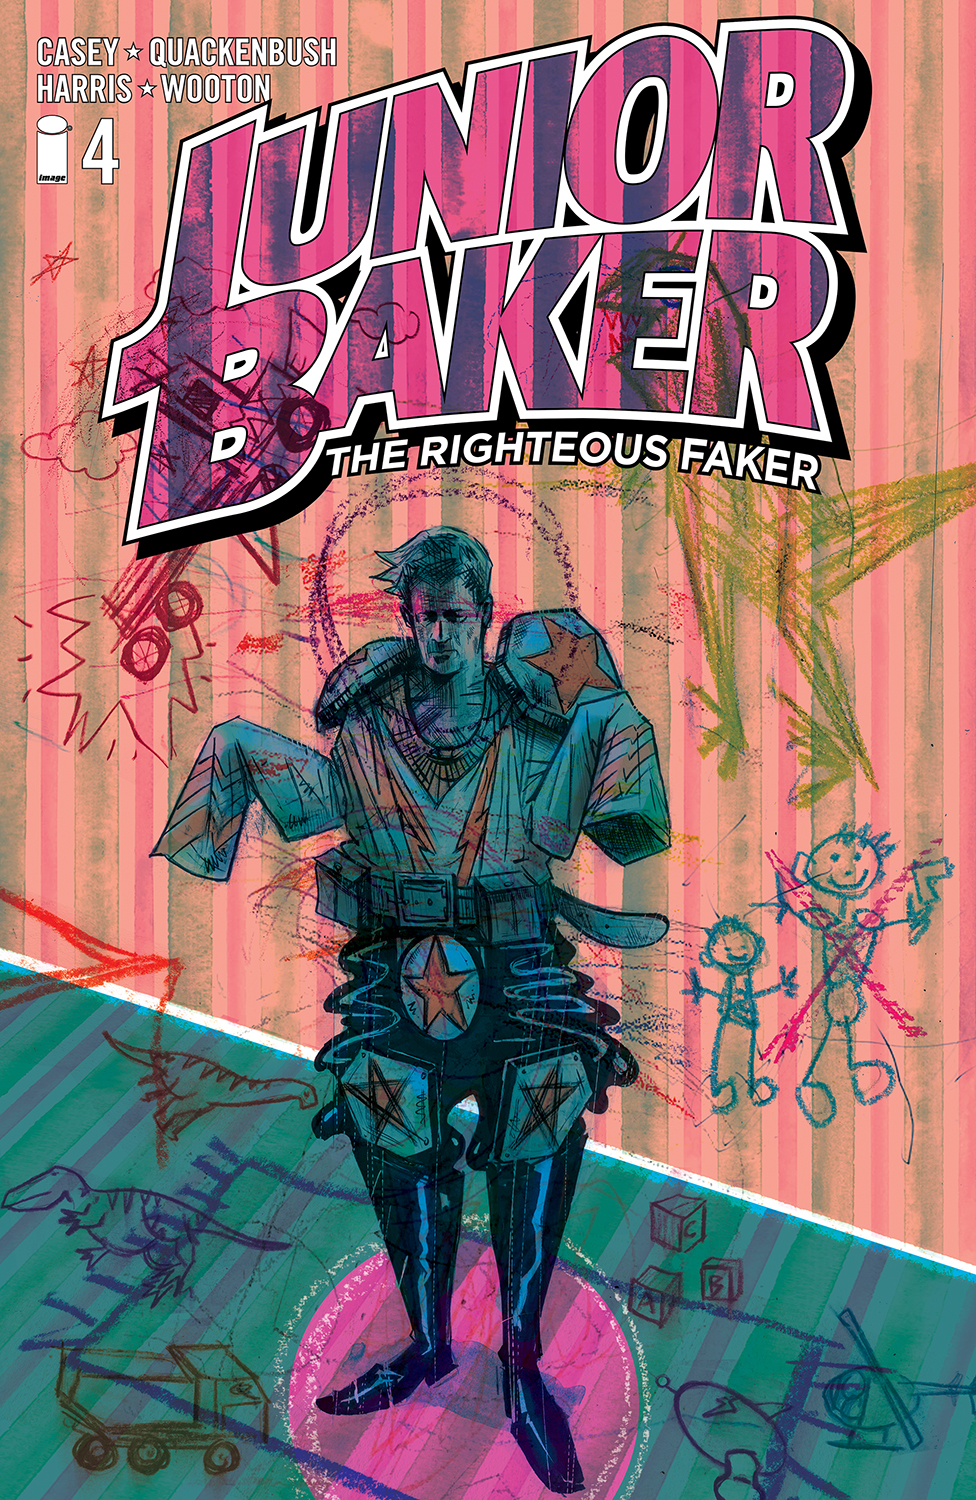 Junior Baker The Righteous Faker #4 Cover A Quackenbush (Of 5)